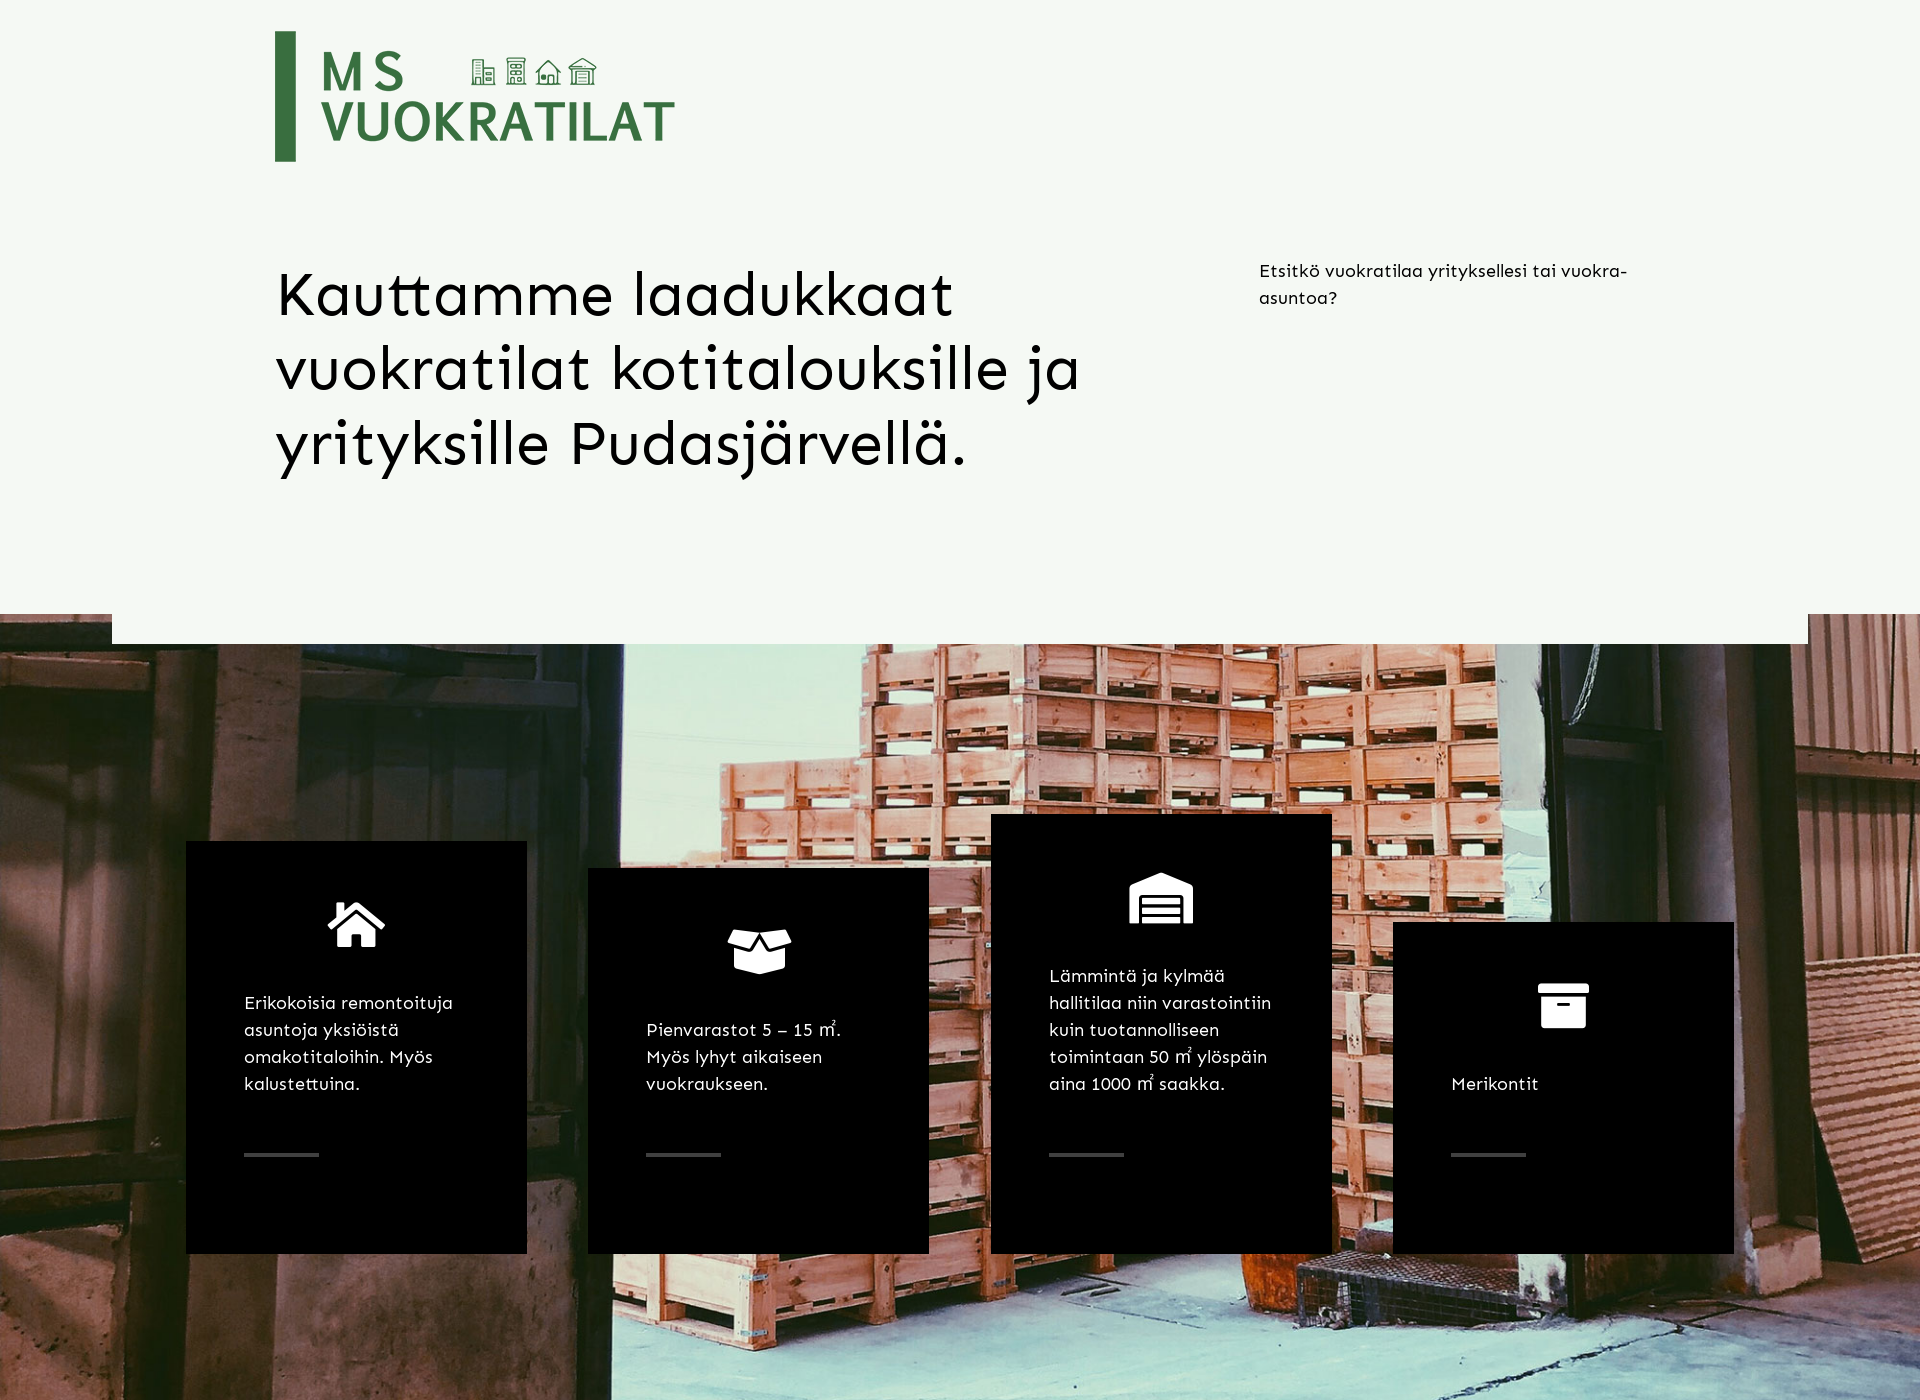 Näyttökuva msvuokratilat.fi